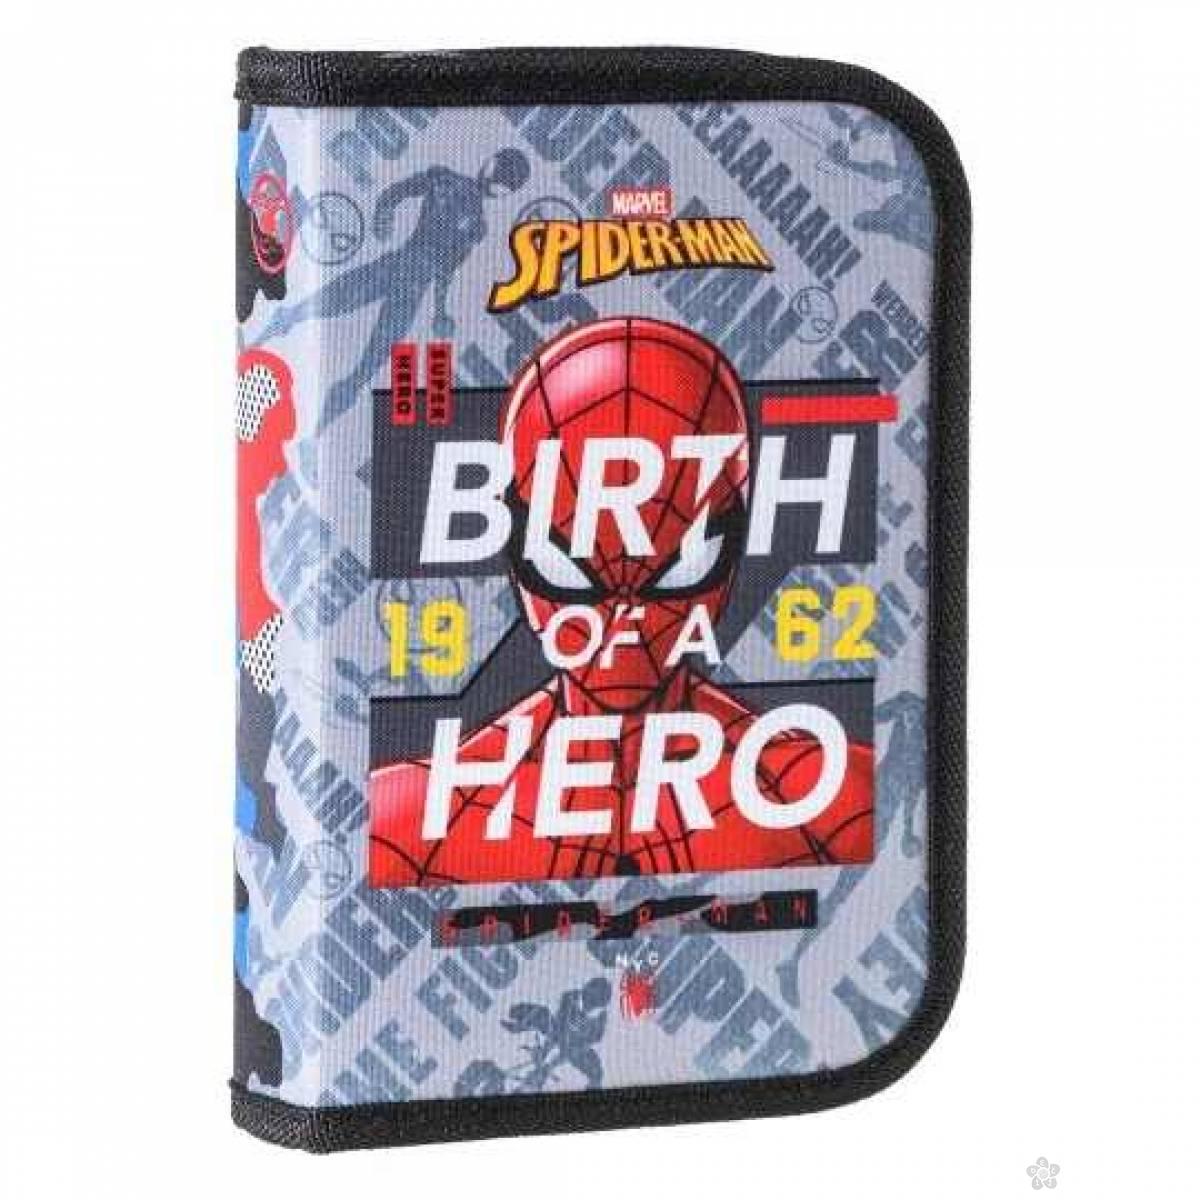 Pernica puna 1 zip Spiderman, Birth of a hero 326472 